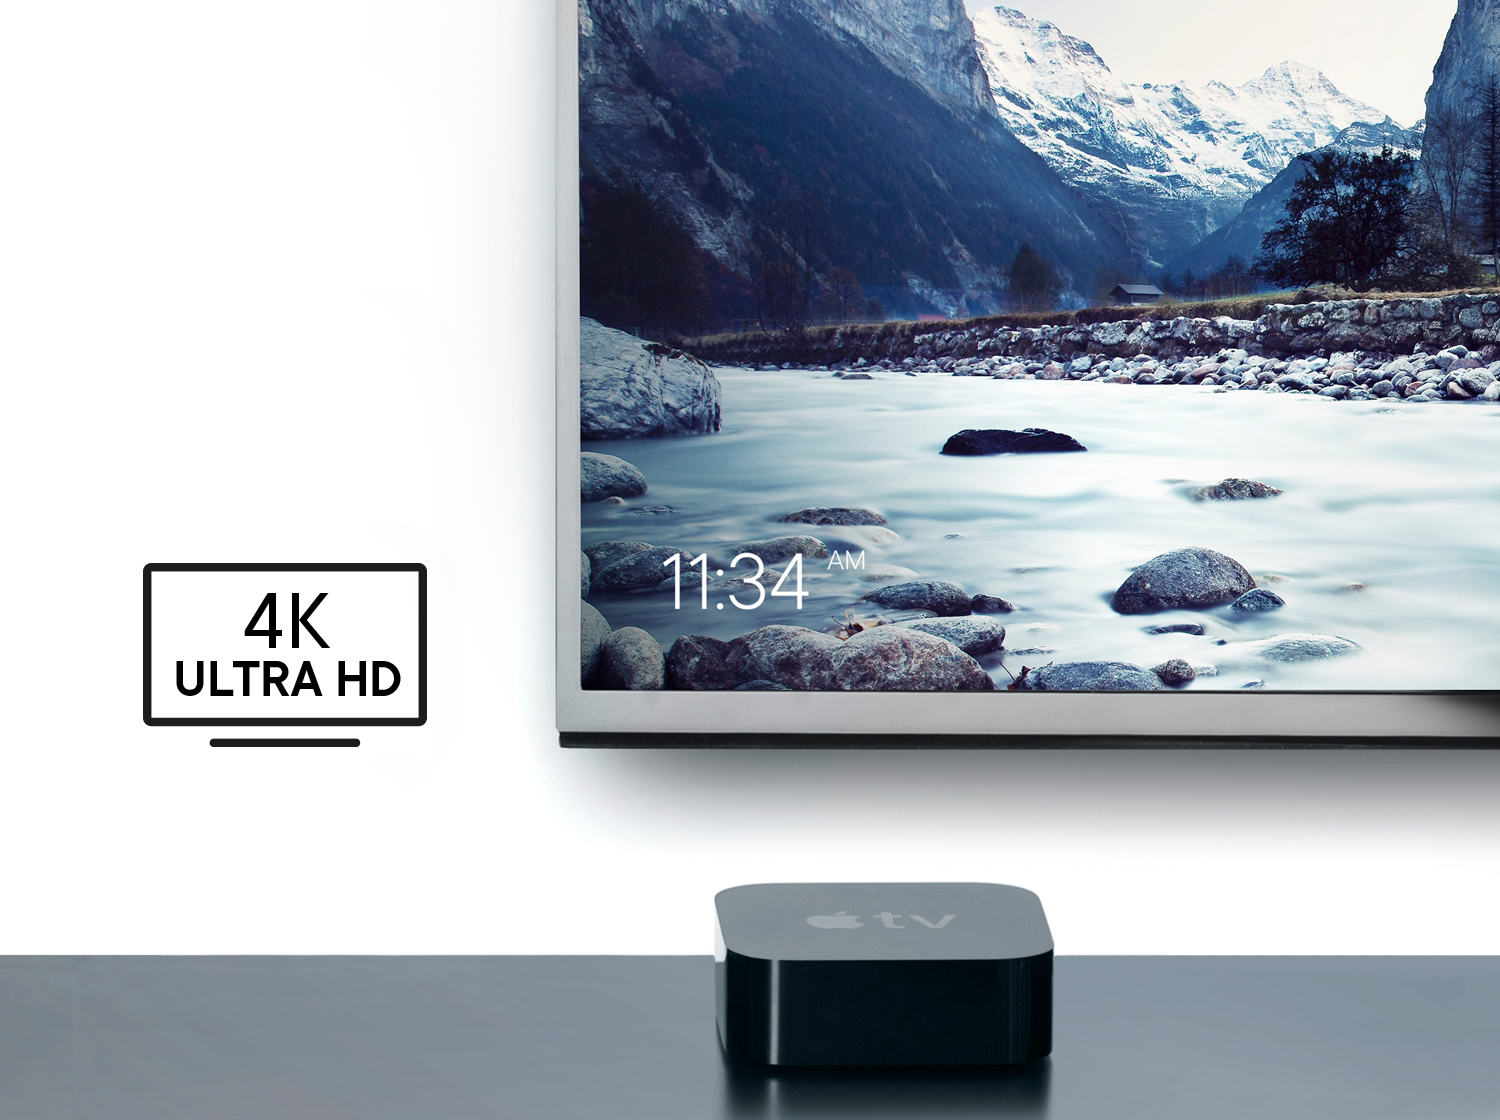 4K Ultra HD broadcast